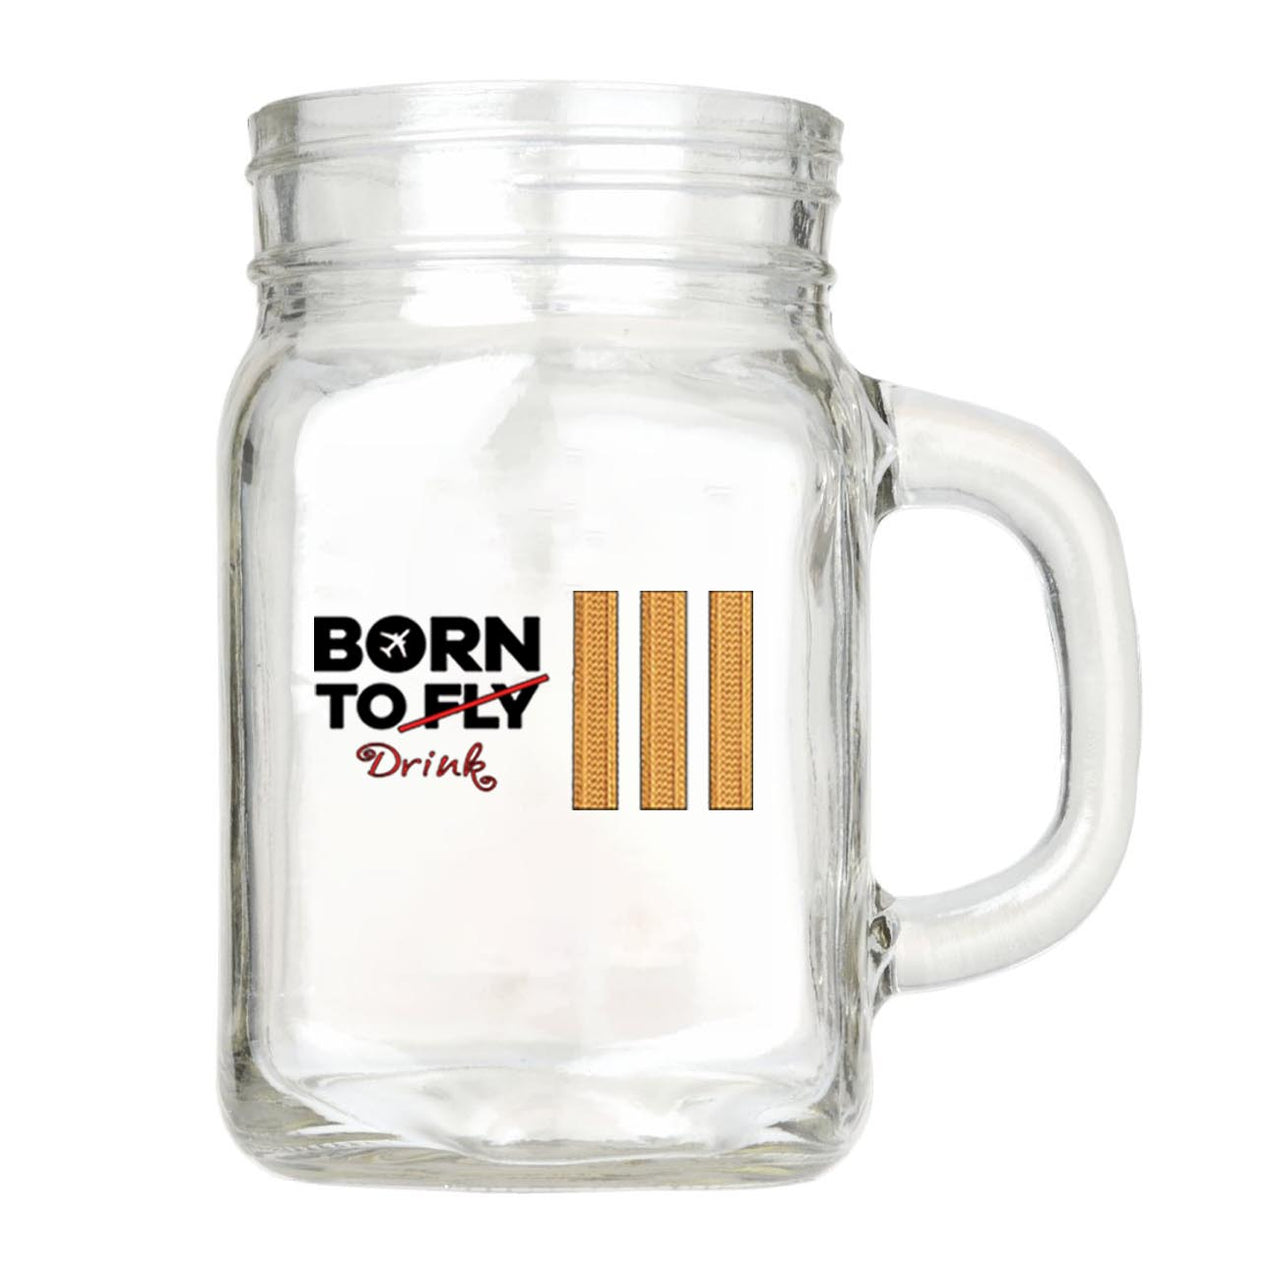 Born To Drink & 3 Lines Designed Cocktail Glasses